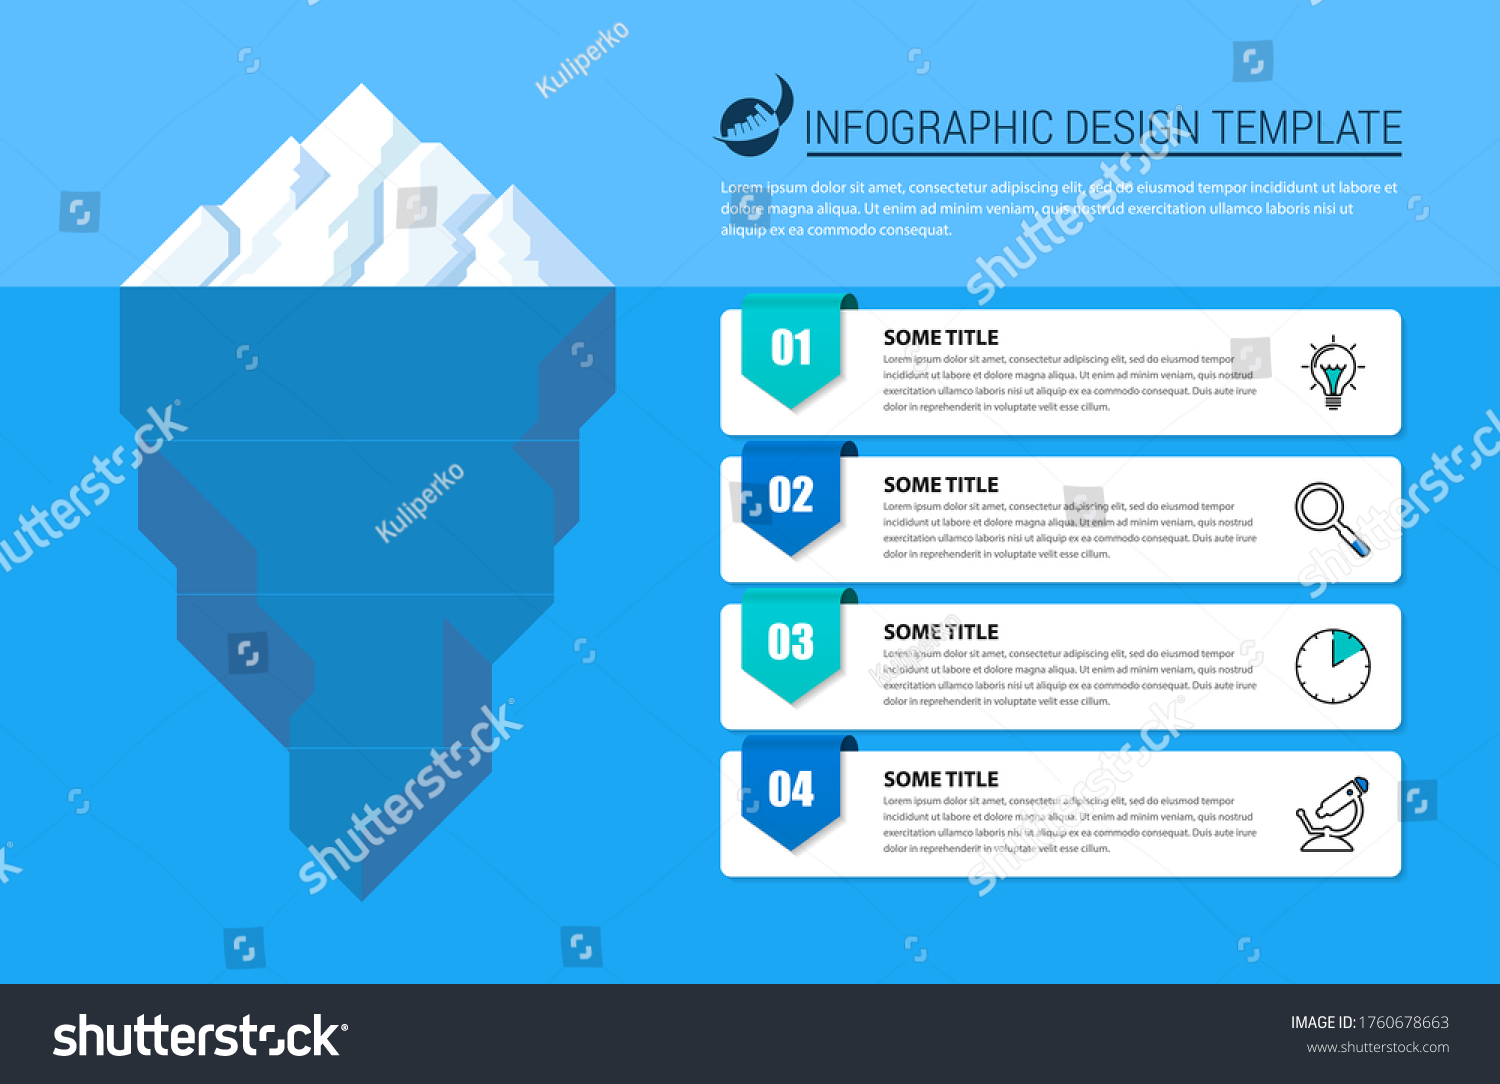 410 Iceberg diagram Images, Stock Photos & Vectors | Shutterstock